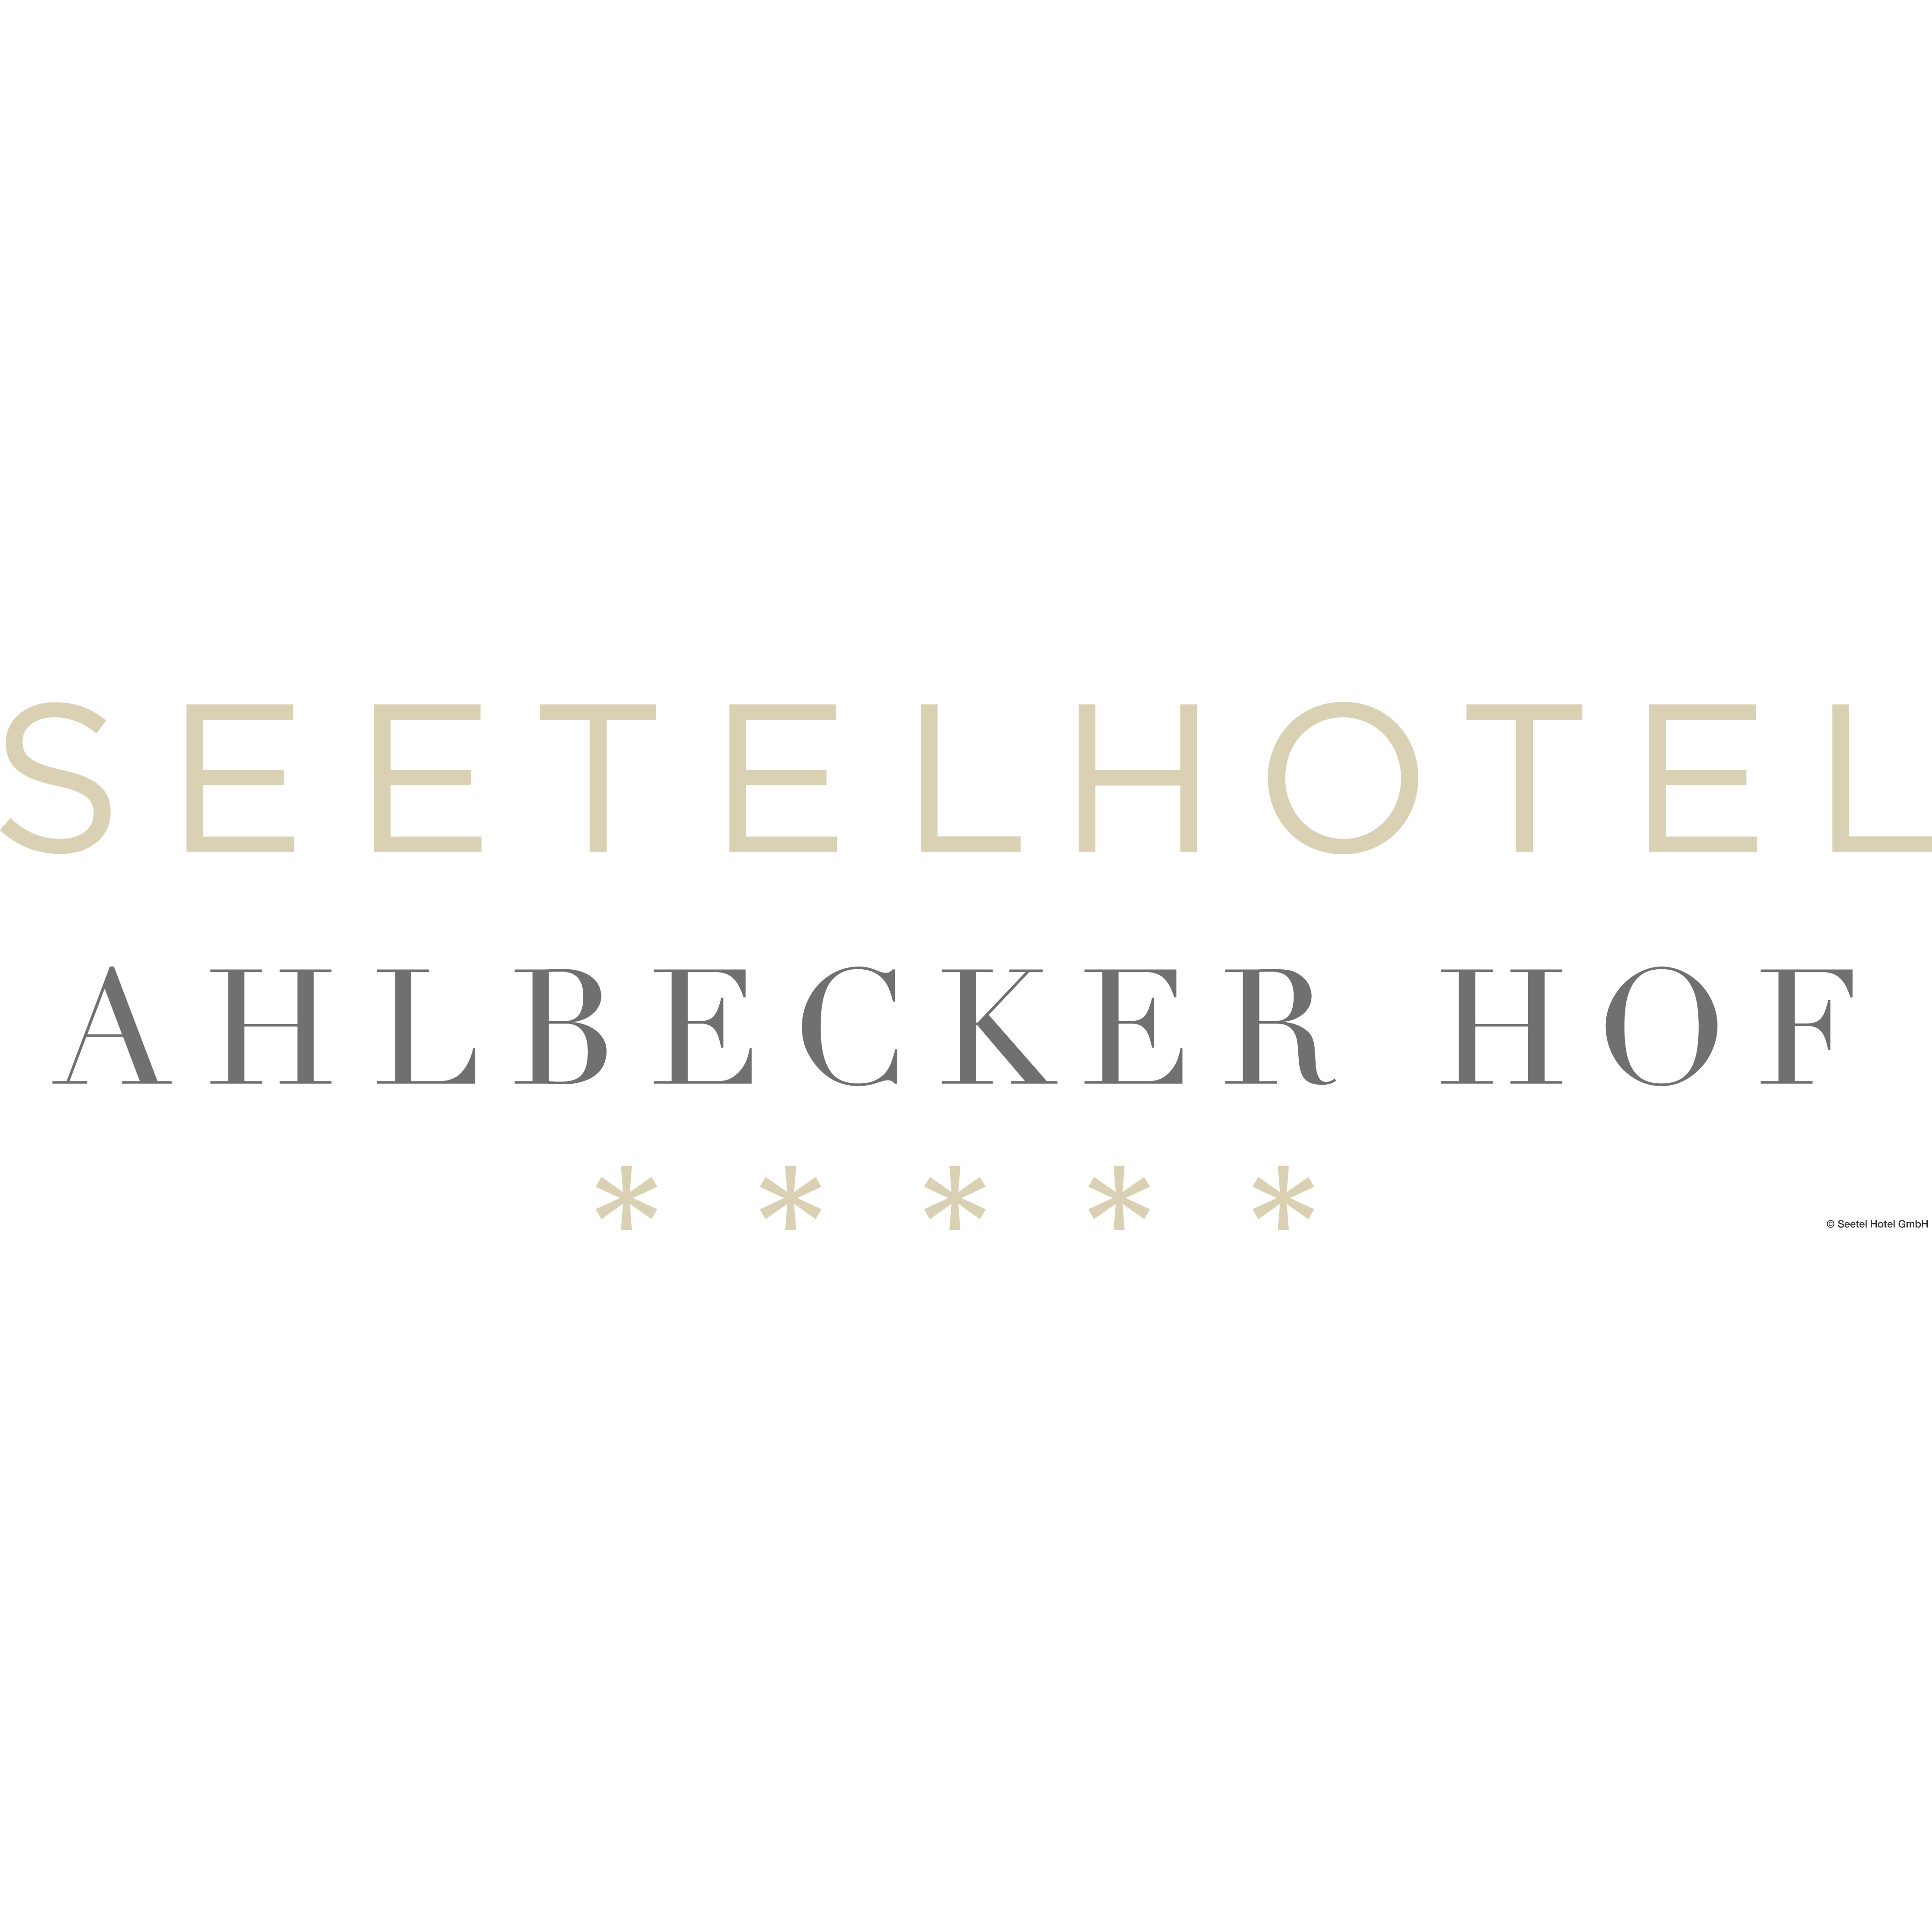 Seetelhotel - Ahlbecker Hof - Logo